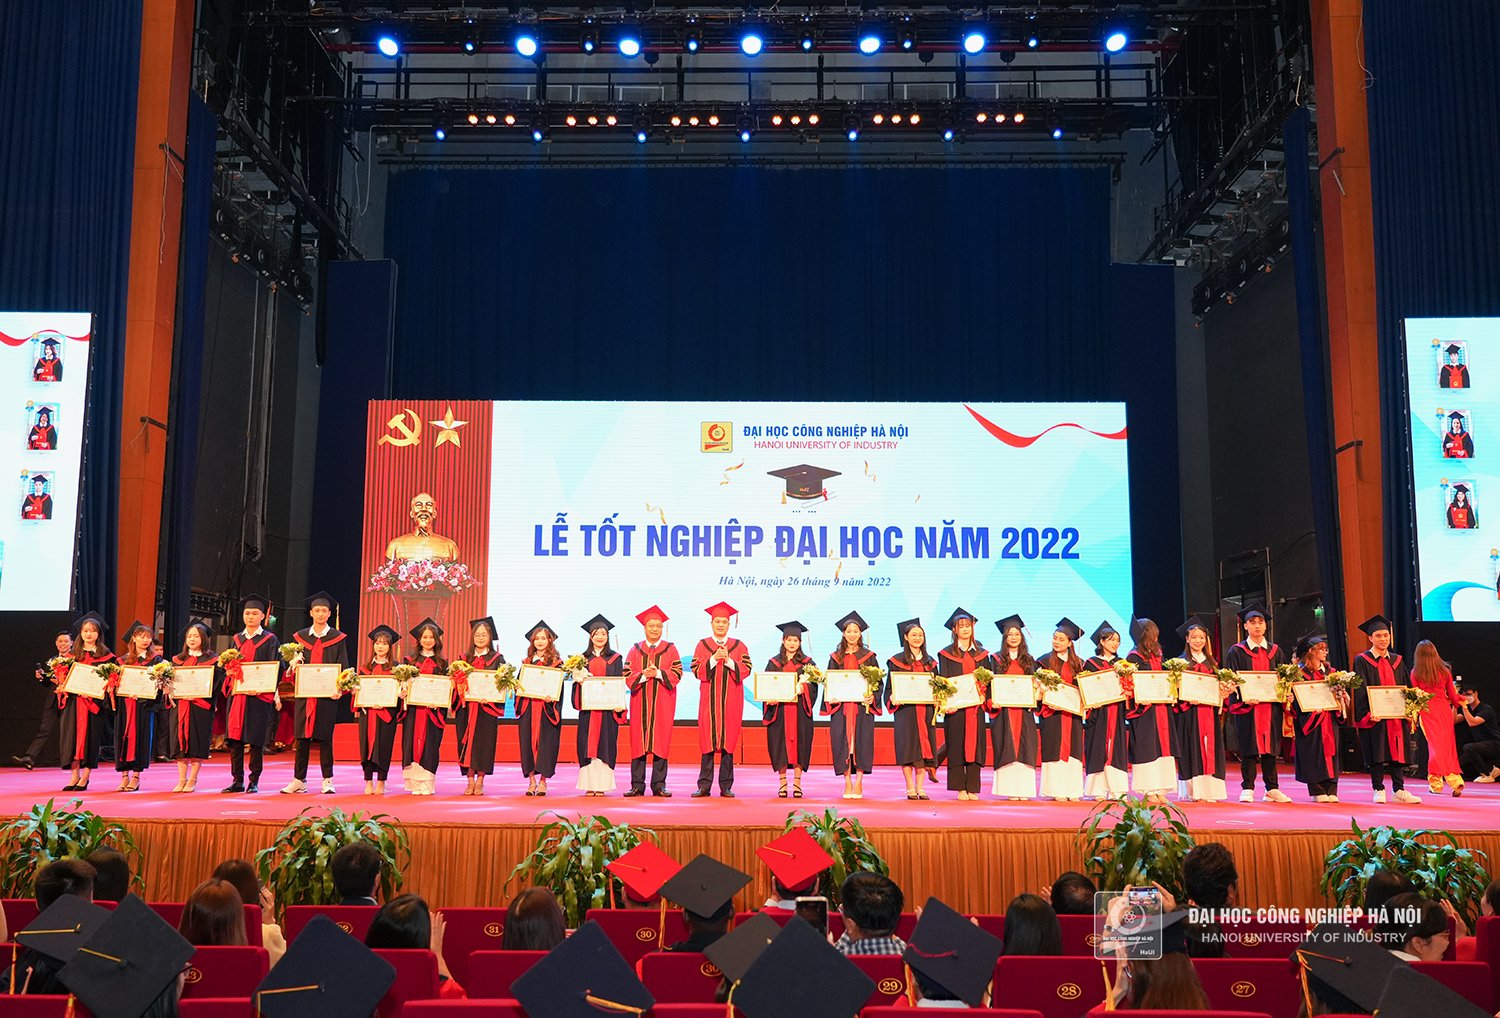 Hanoi University of Industry awards more than 5,000 degrees